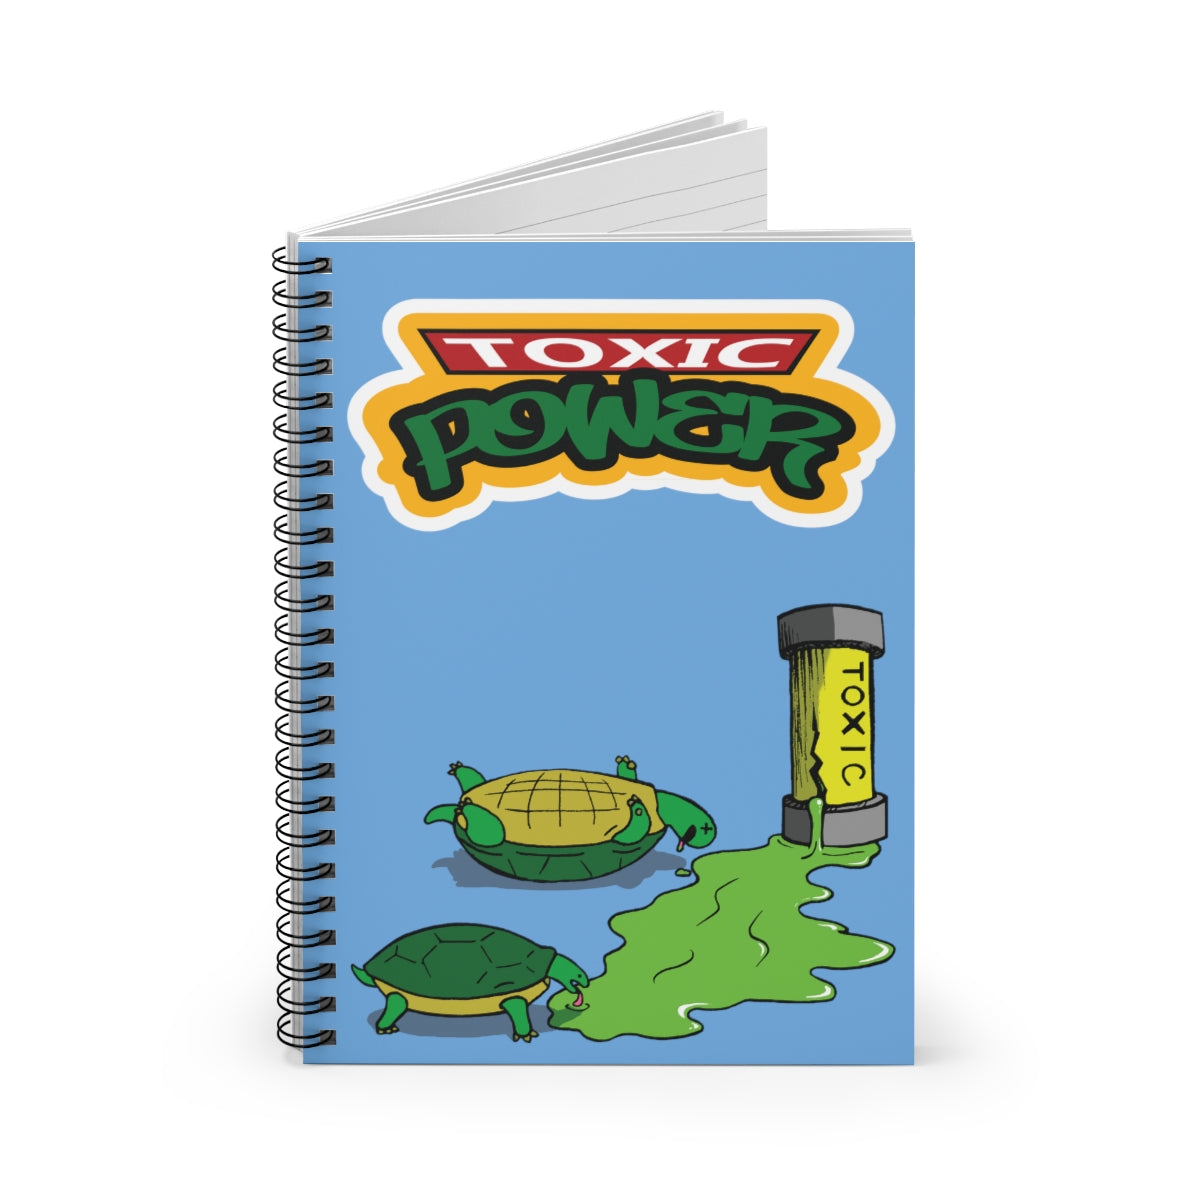 Toxic Power Utility Notebook Evil Laboratory